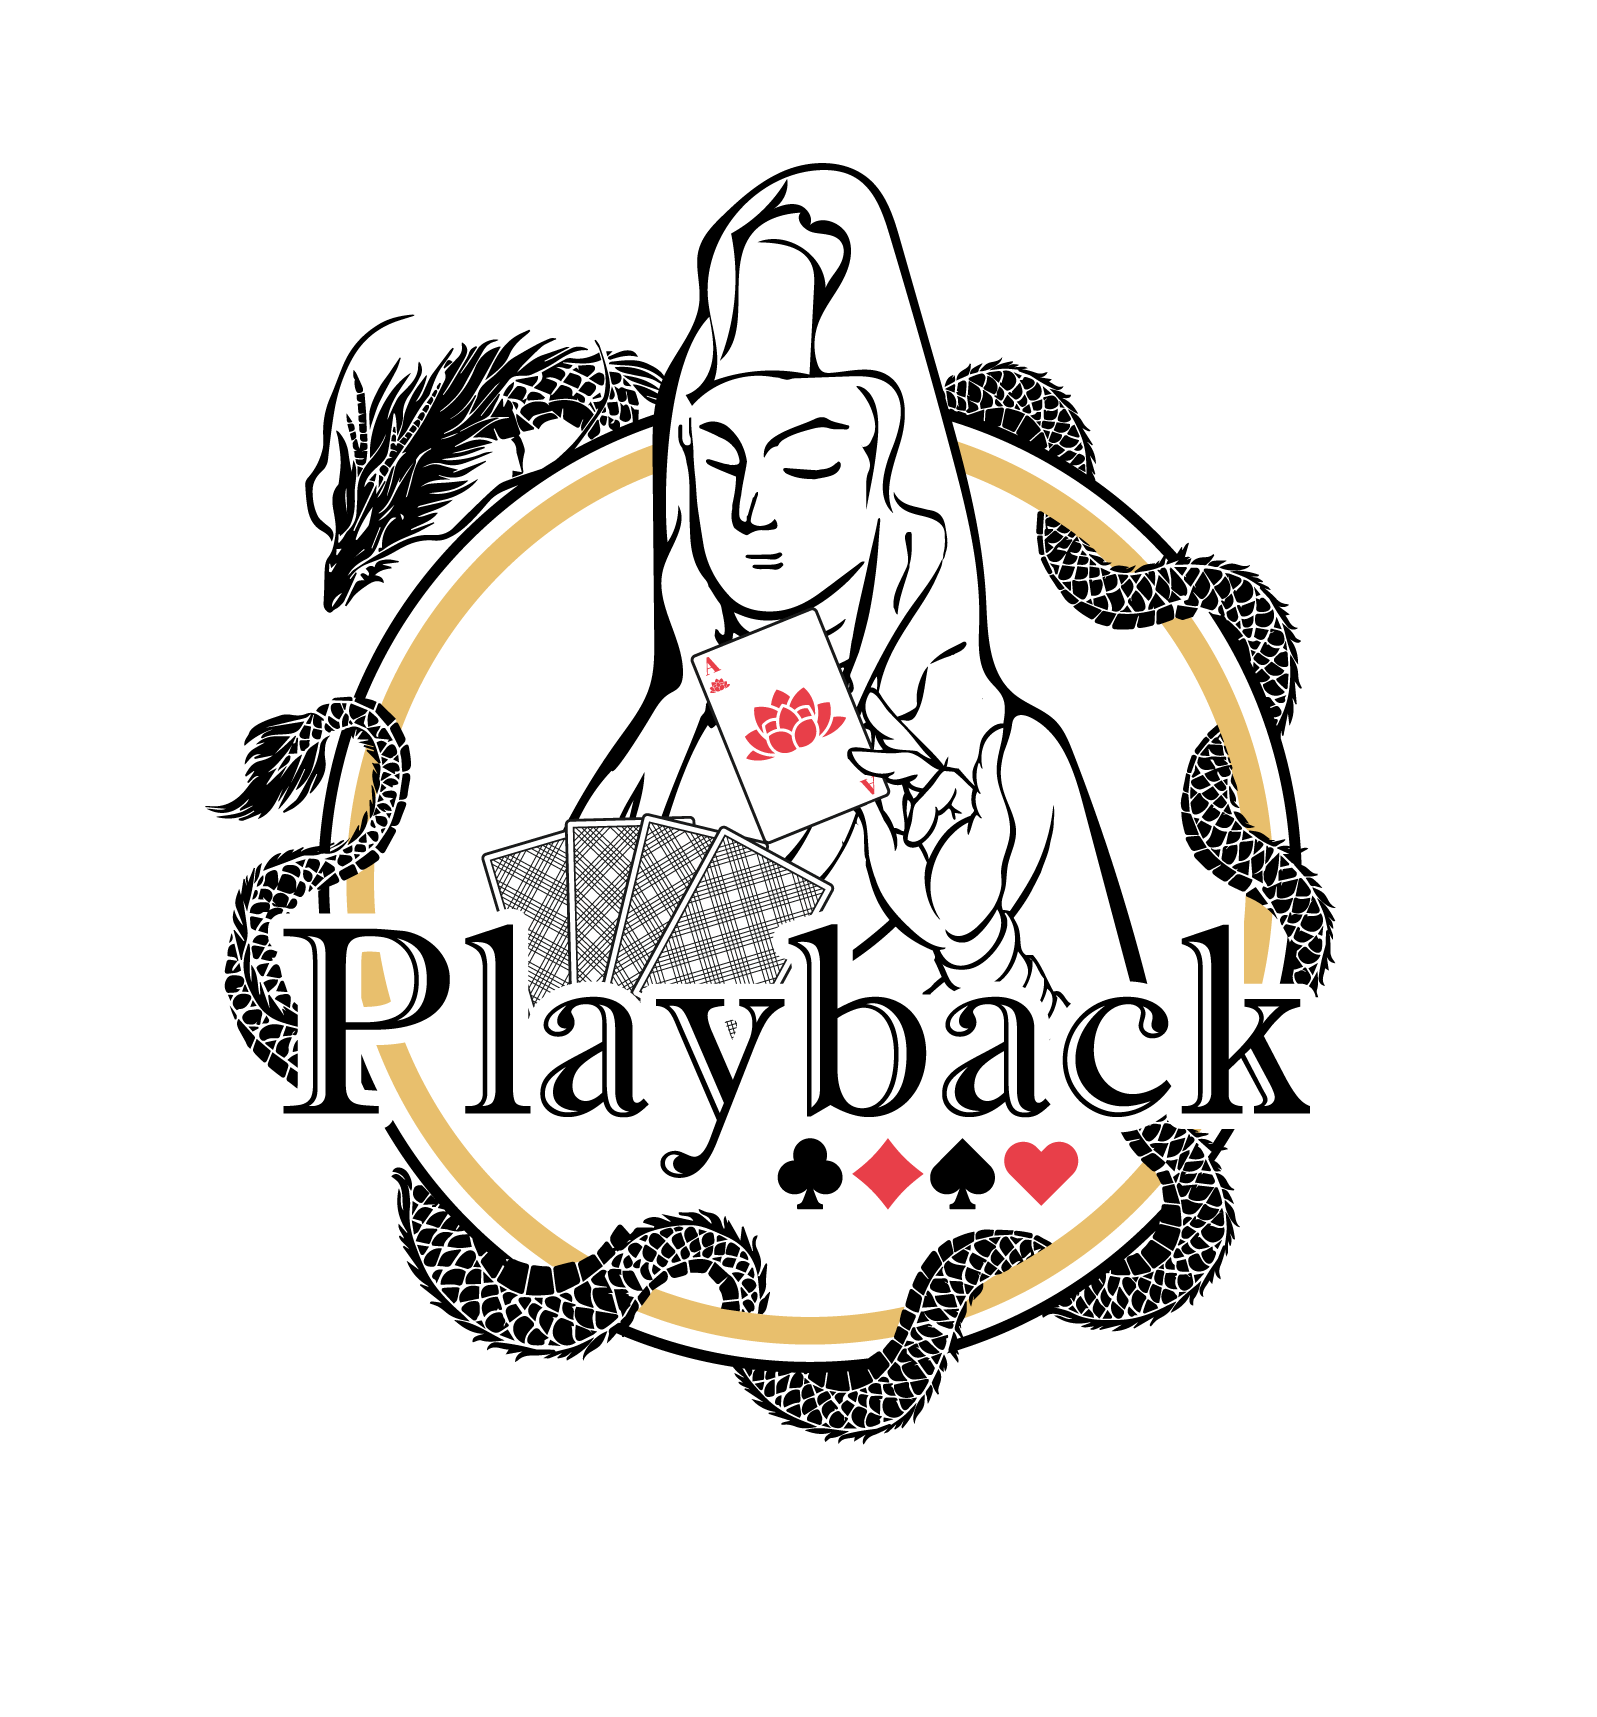 Playback